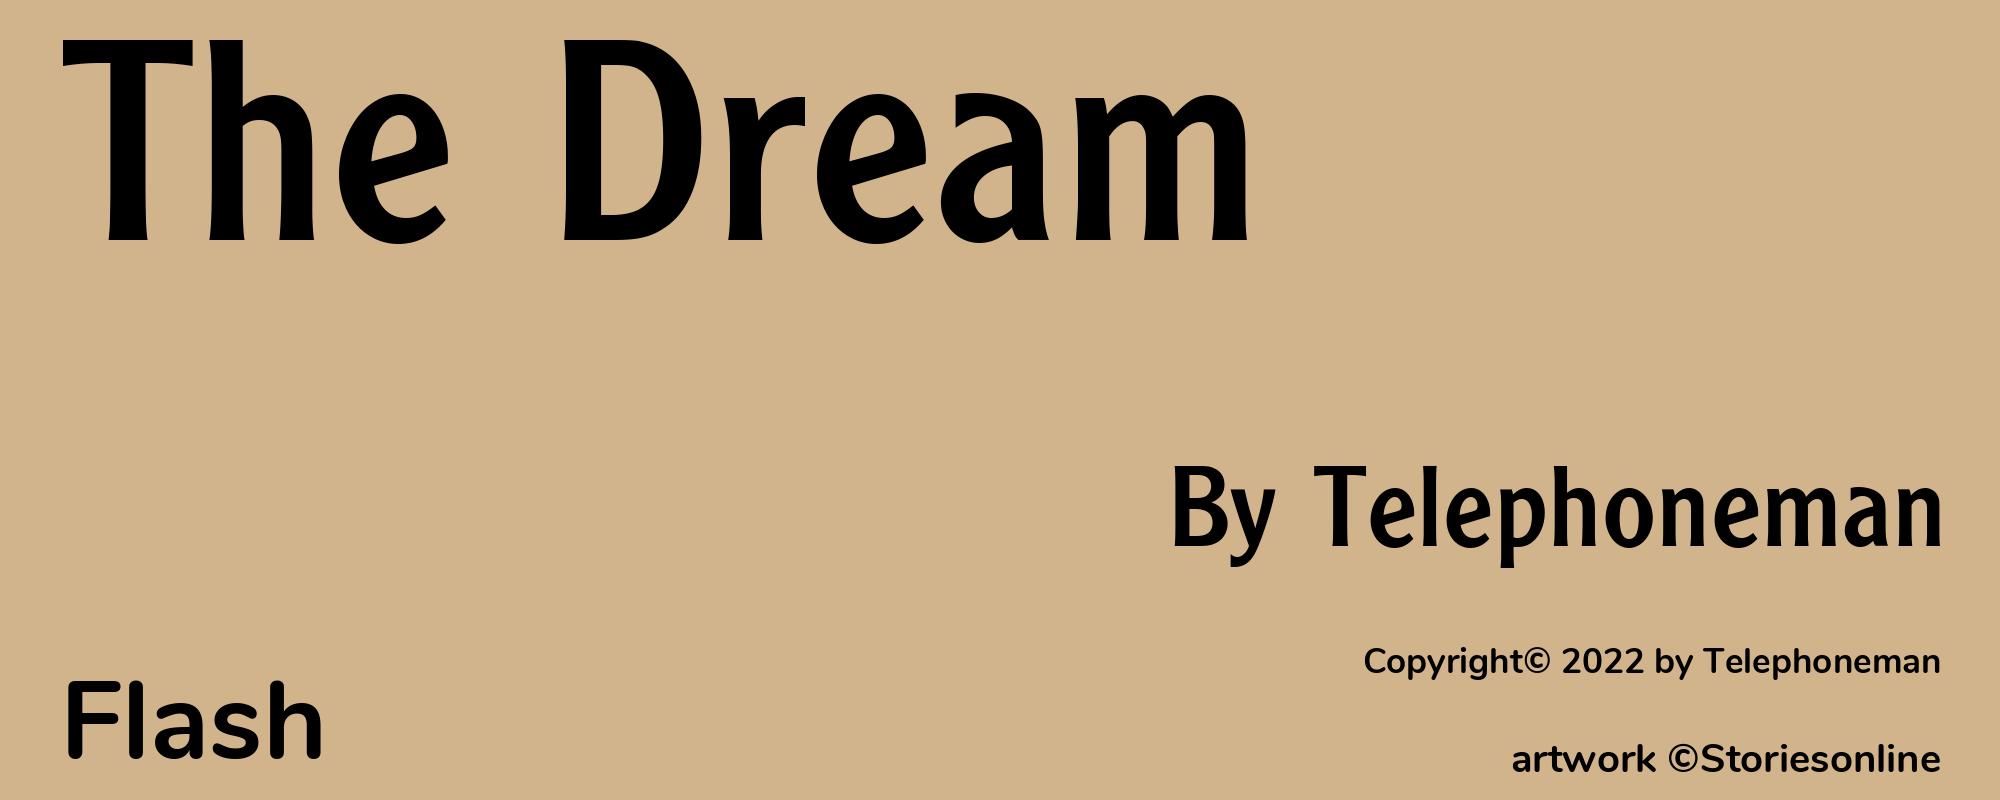 The Dream - Cover